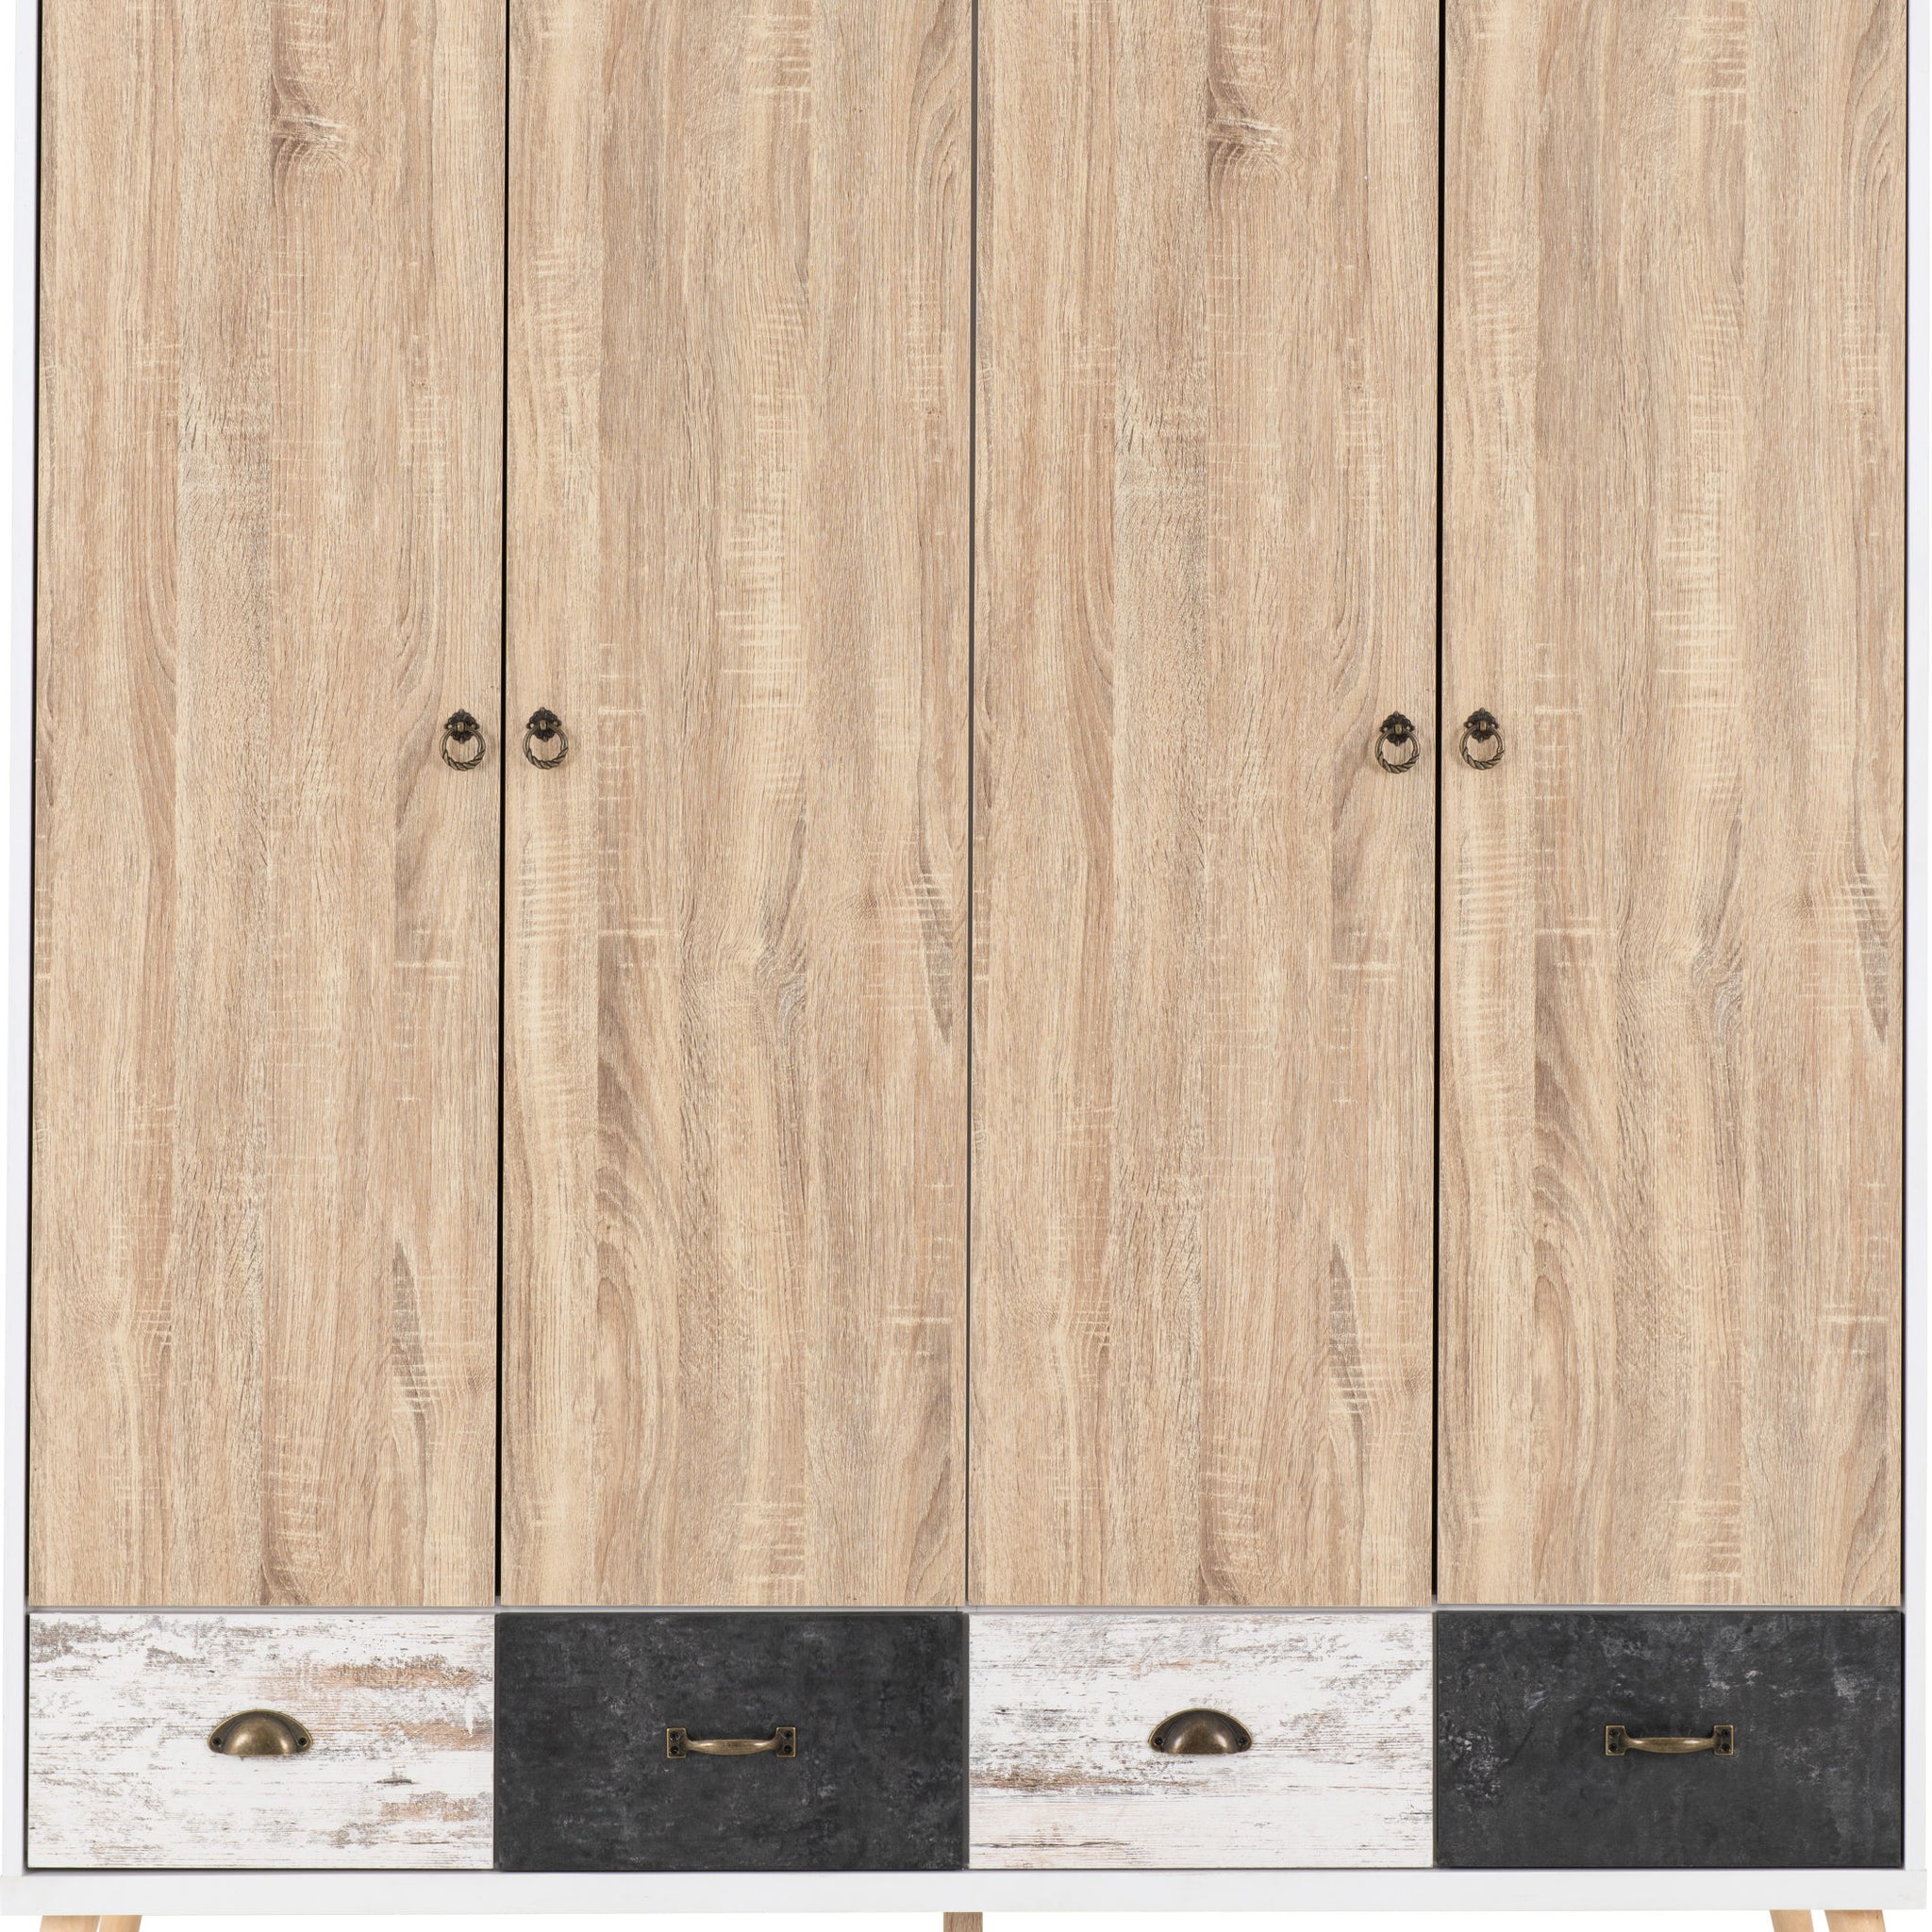 Nordic 4 Door 4 Drawer Wardrobe White/Distressed Effect